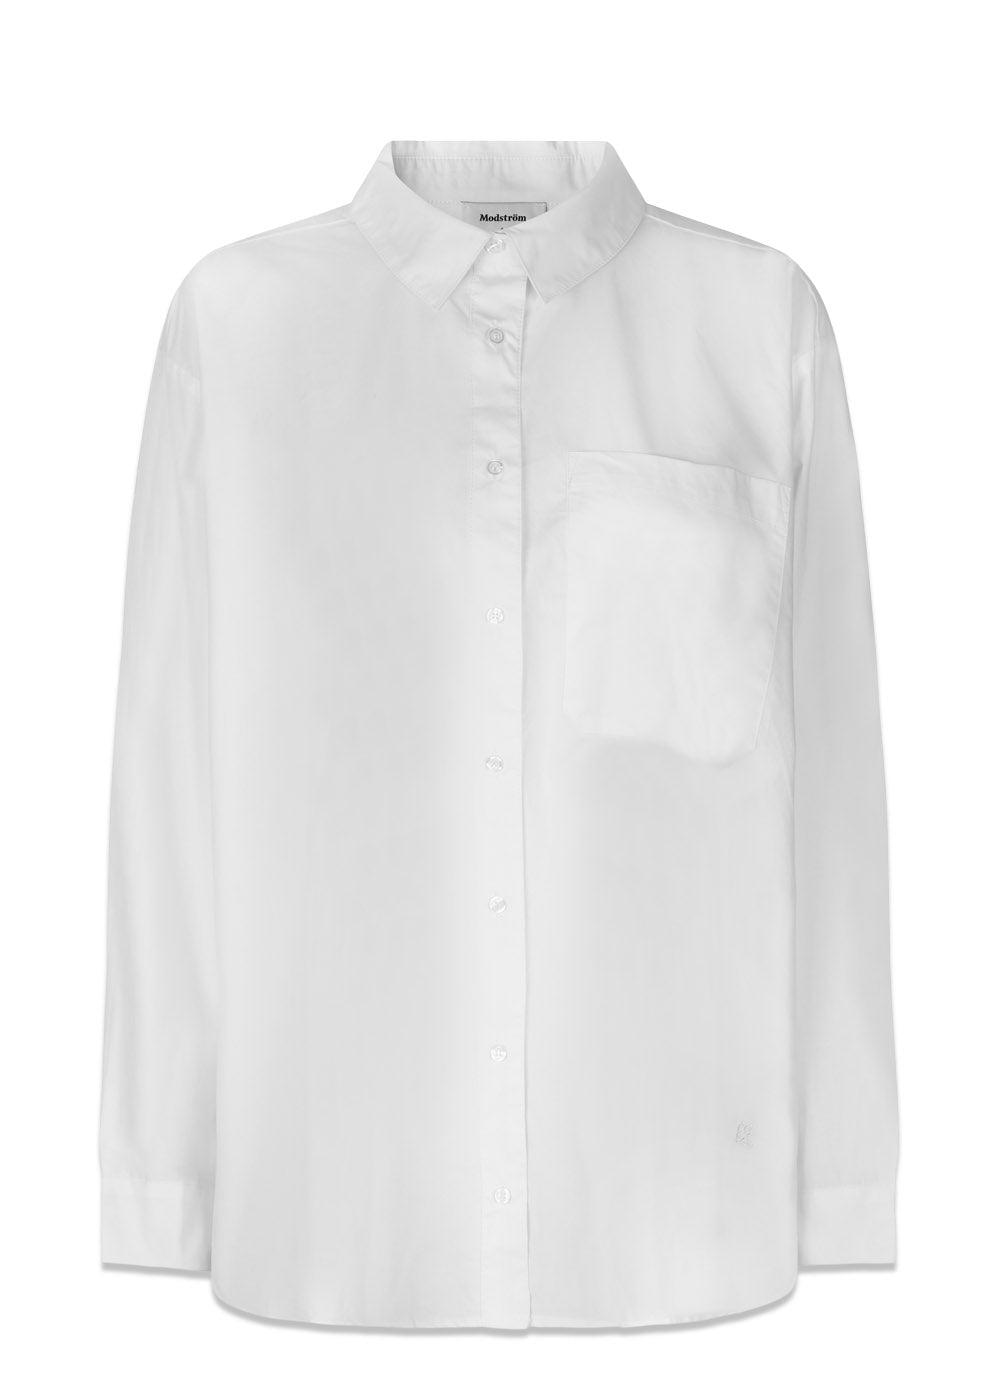 Modströms TapirMD shirt - Soft White. Køb shirts her.